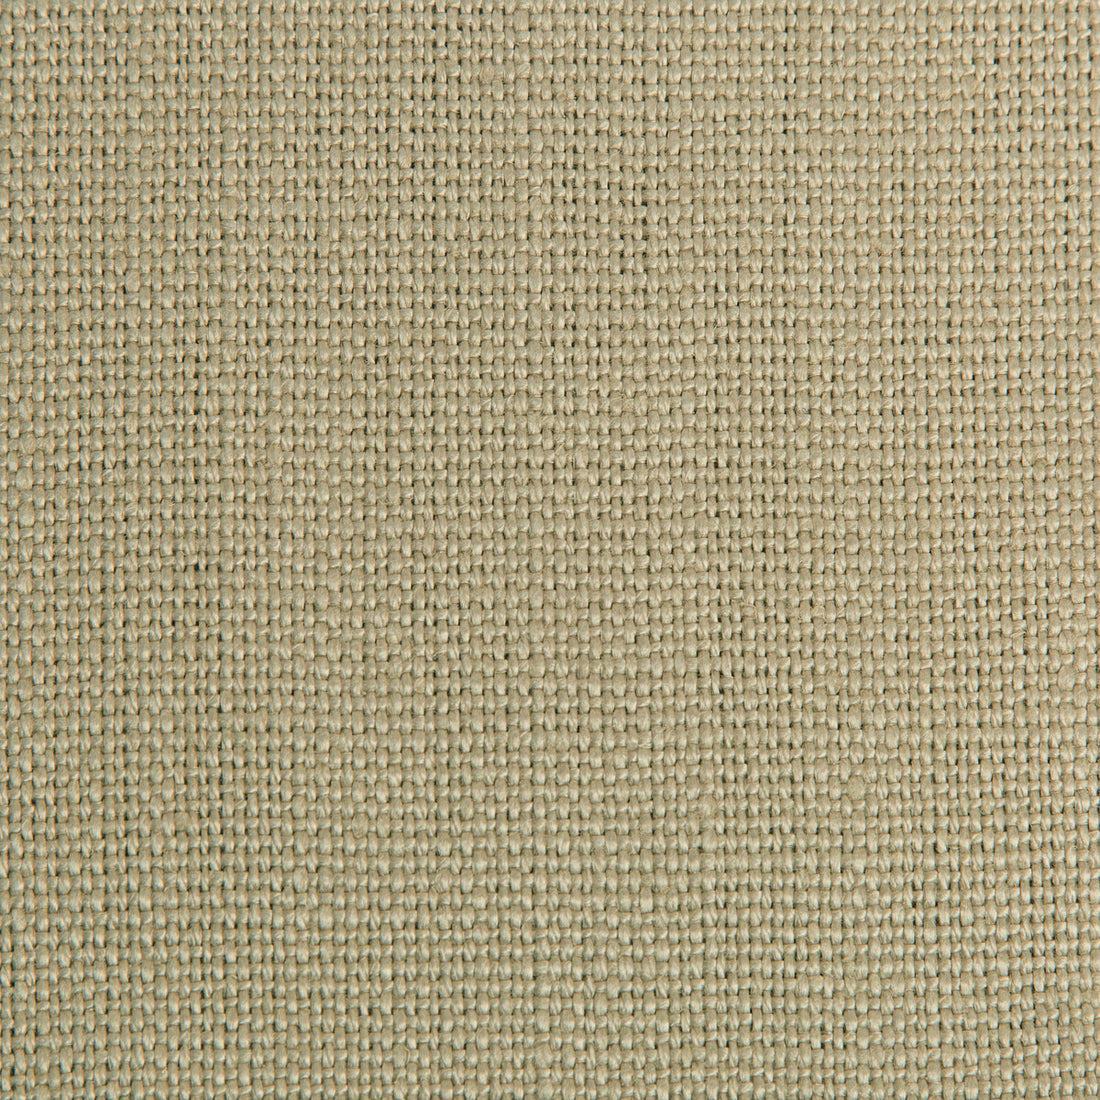 Stone Harbor fabric in pebble color - pattern 27591.116.0 - by Kravet Basics